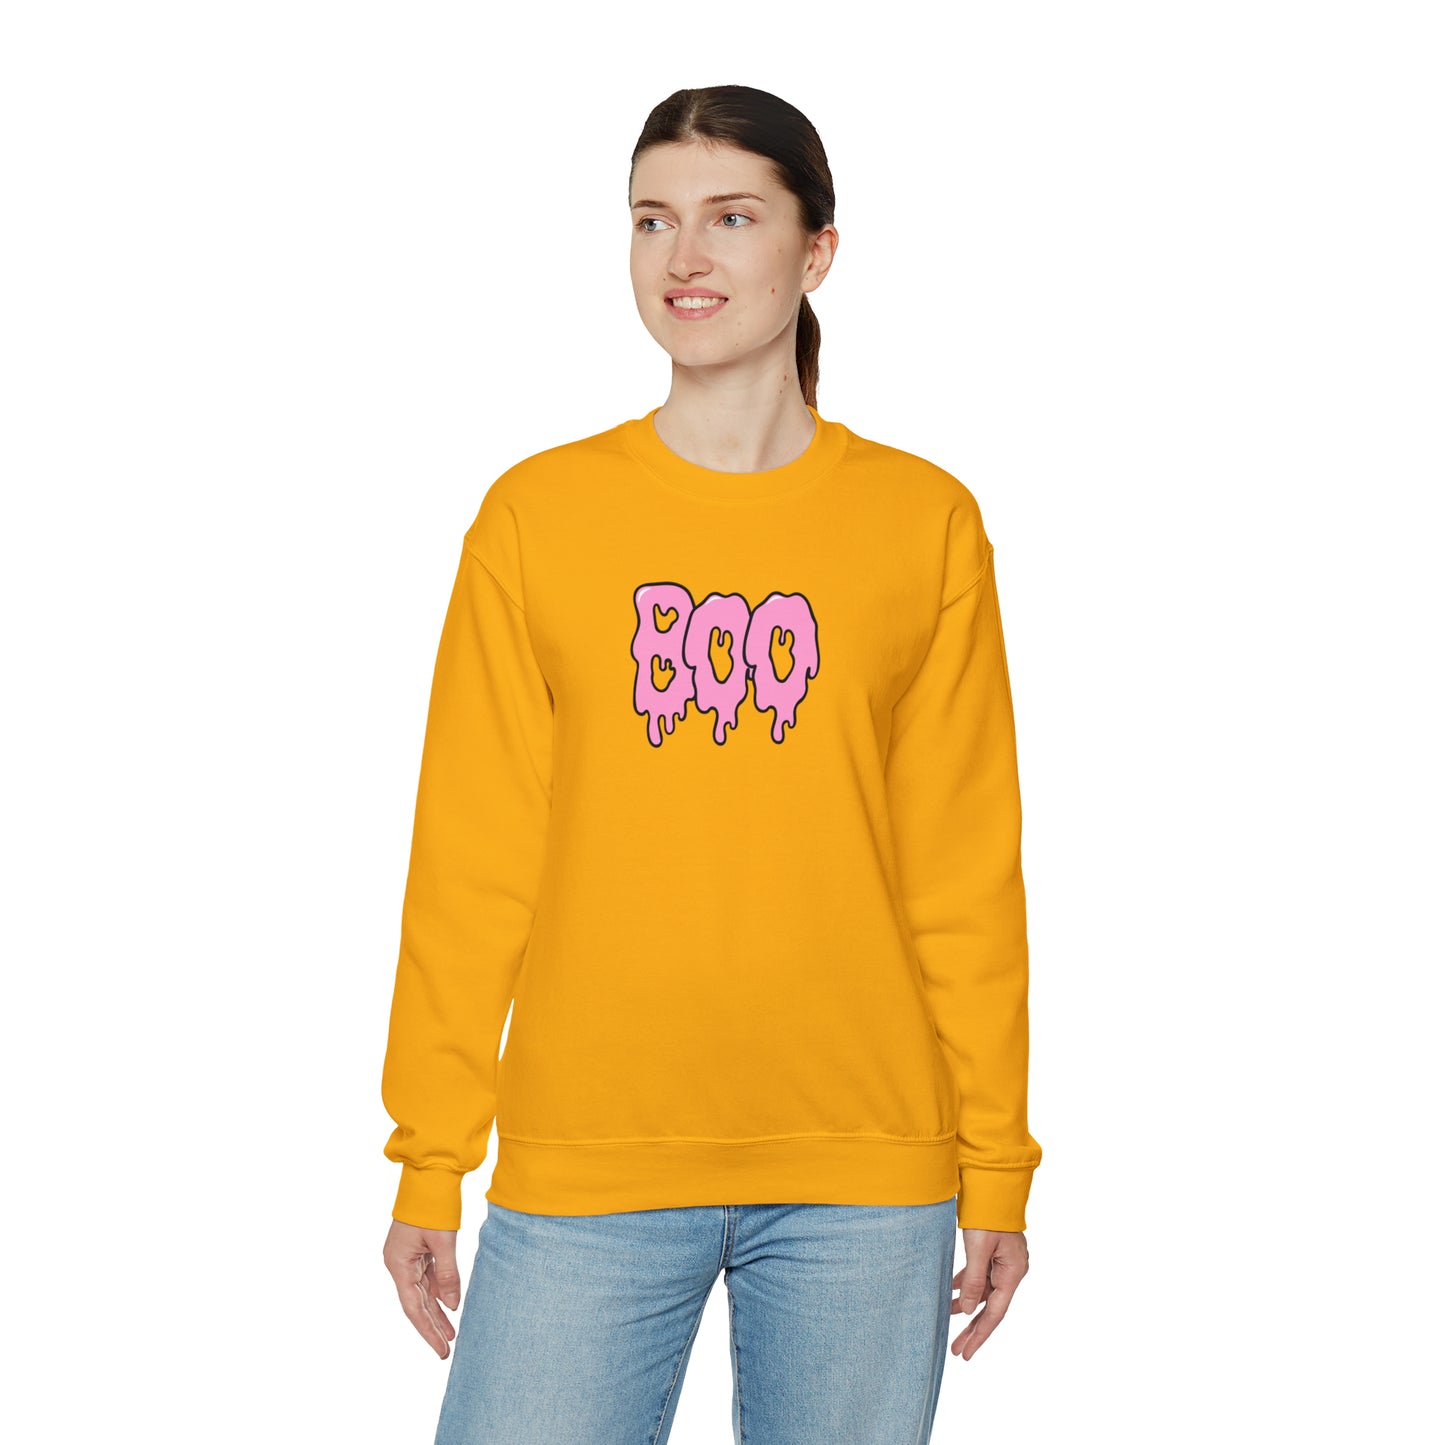 Boo & Boo-tiful Sweatshirt